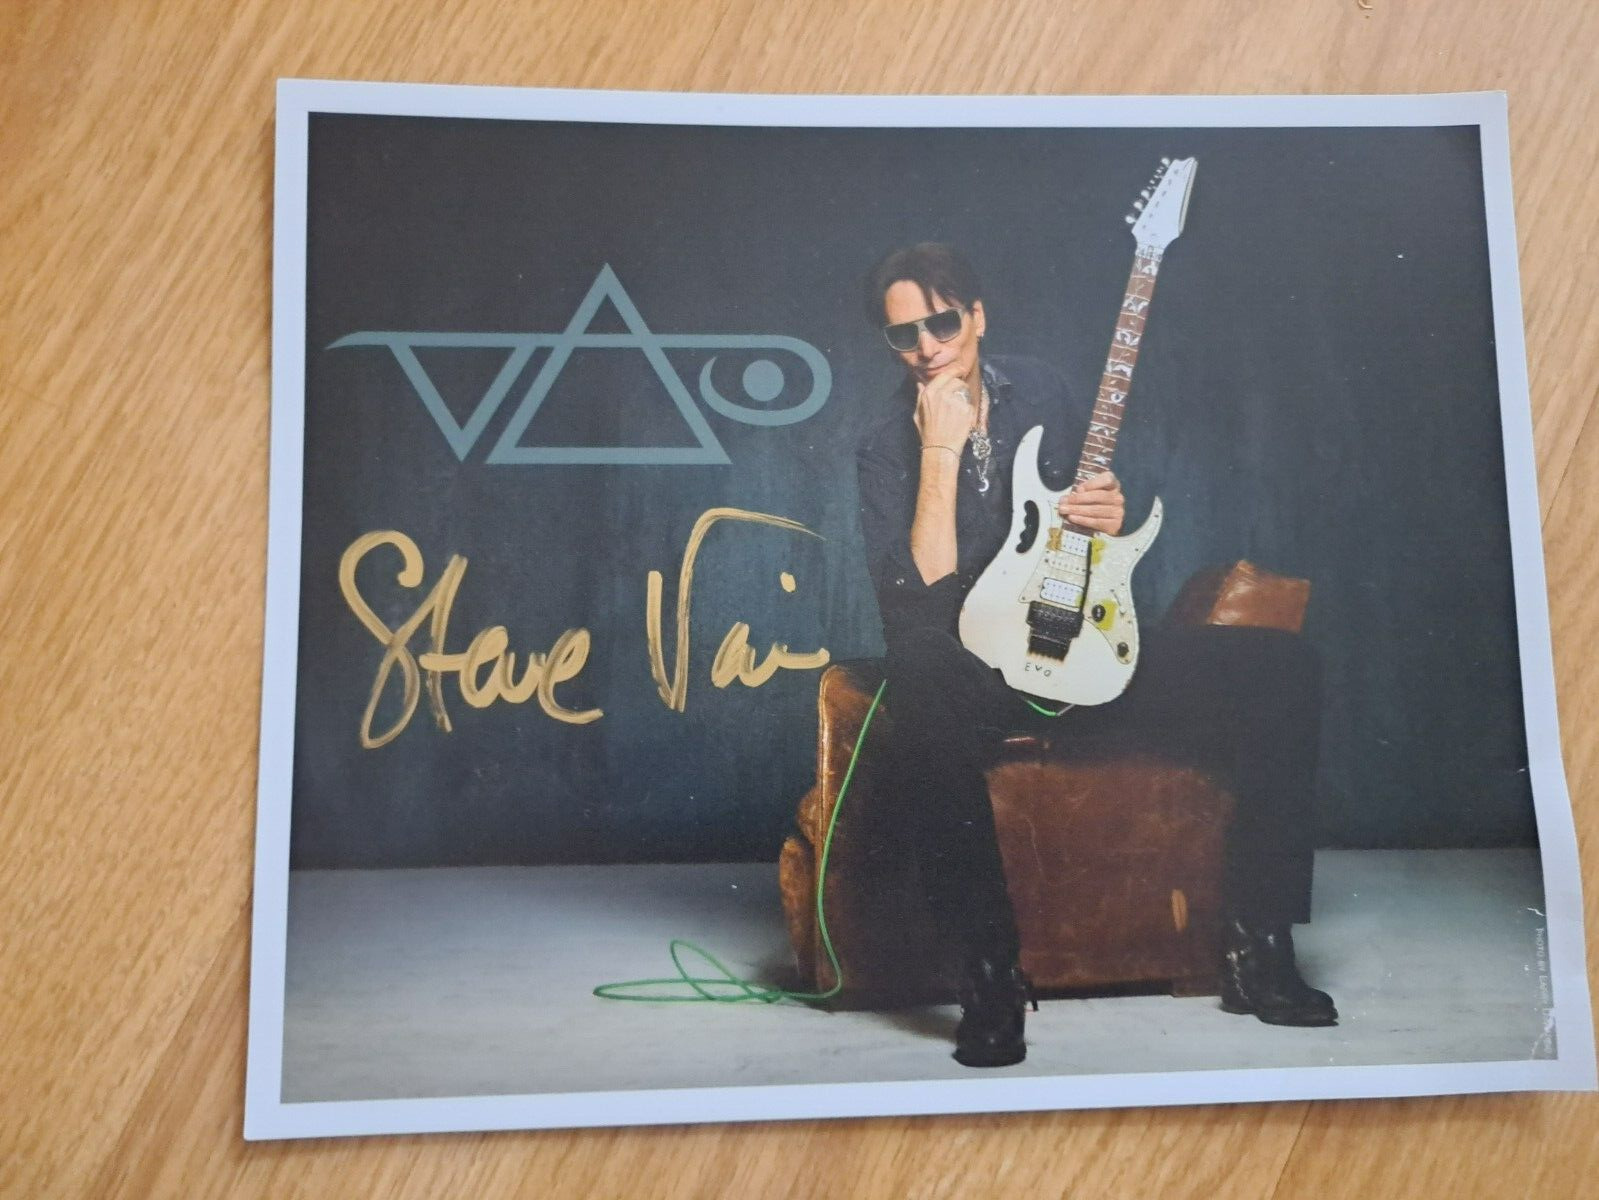 Steve Vai Autographed Picture from Edmonton Aug. 12th show